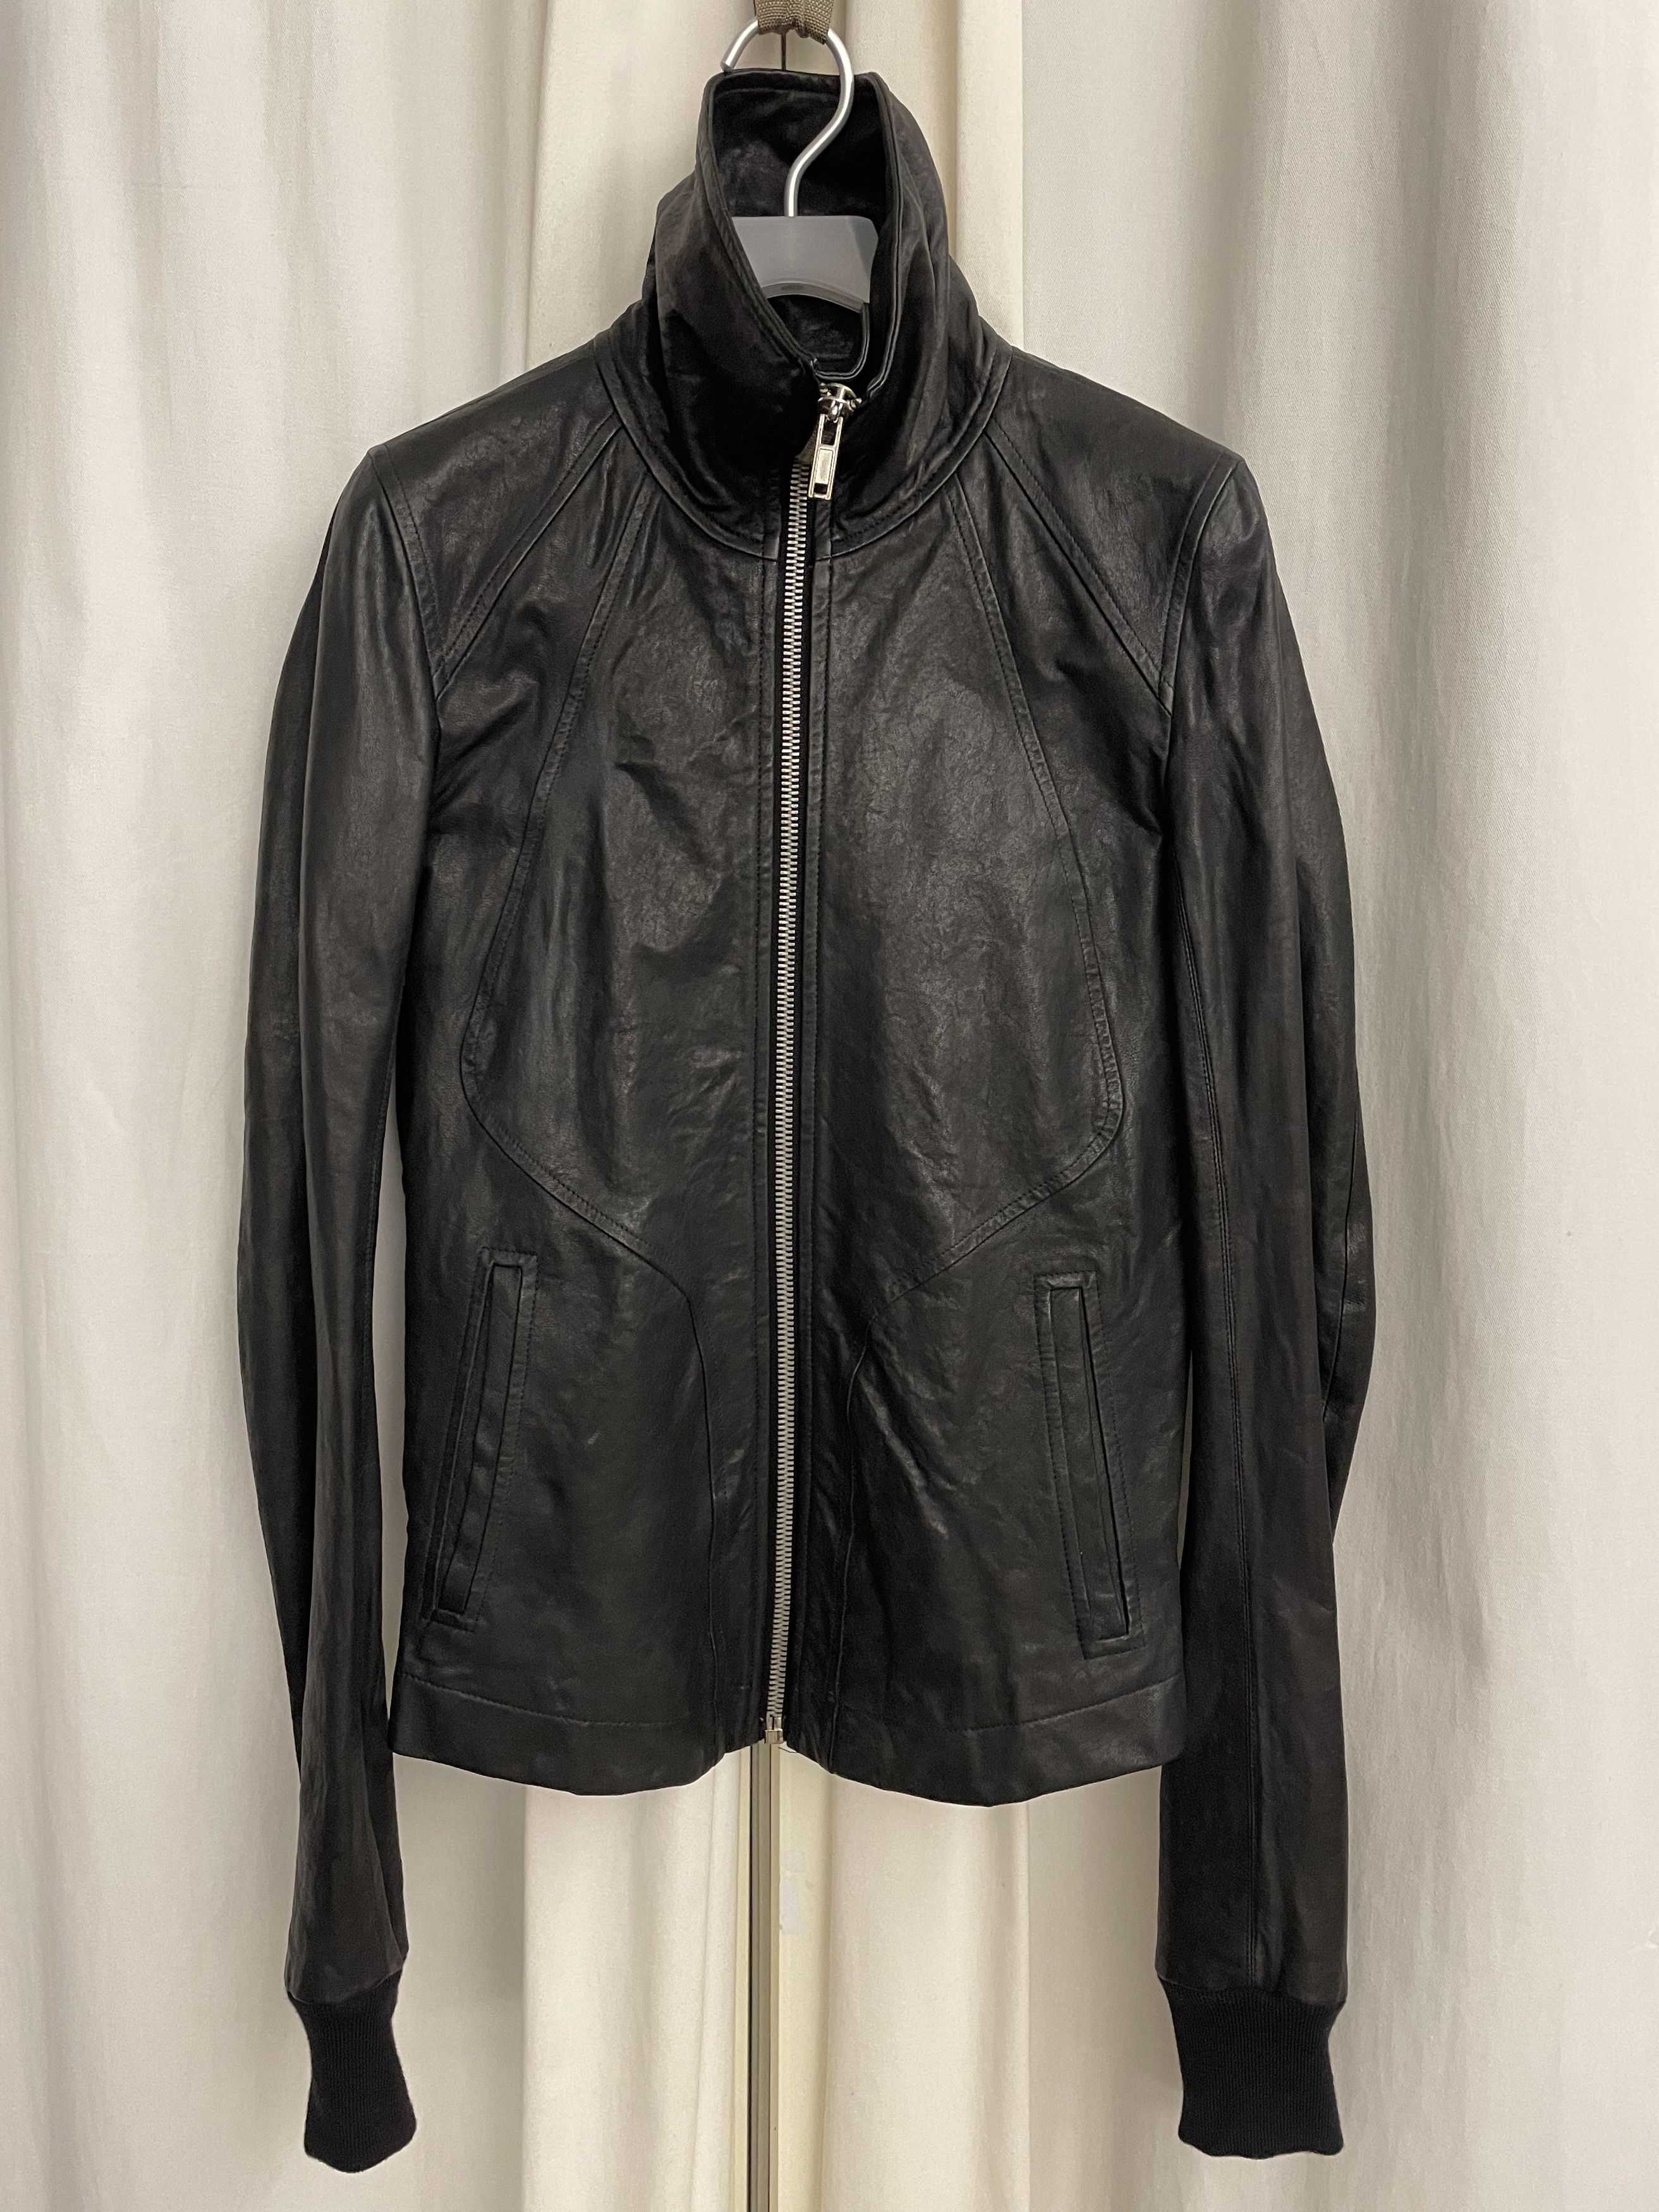 Rick Owens Lamb leather Intarsia jacket 46 | Grailed